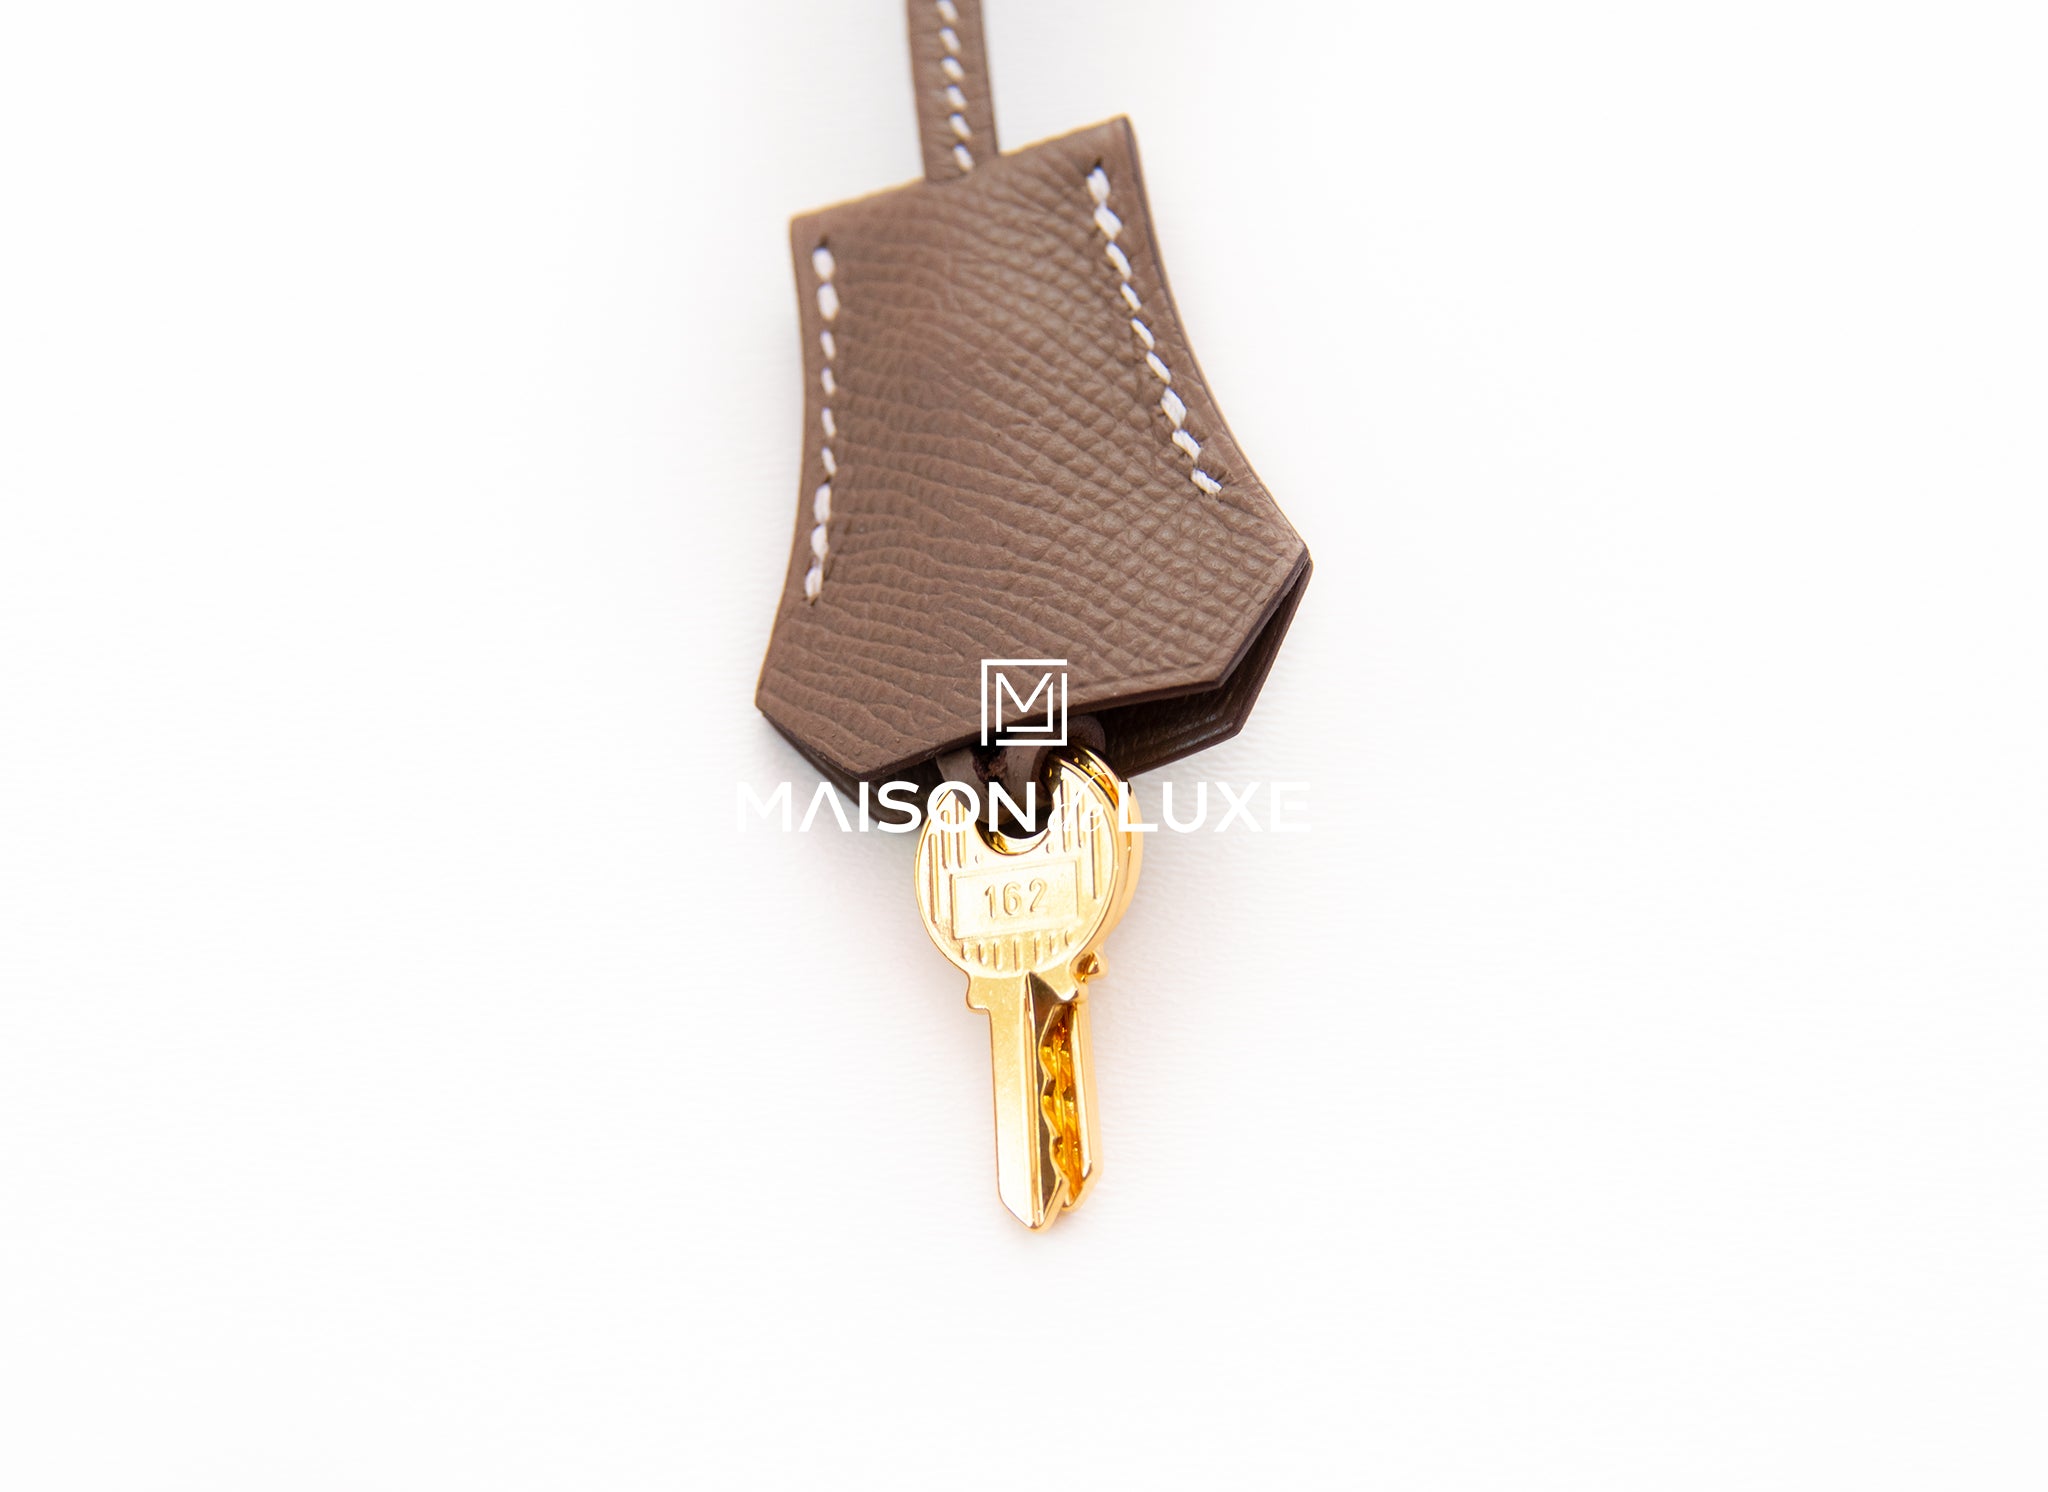 Hermès Kelly 25cm Sellier Veau Epsom Etoupe 18/M8 Gris Asphalt Gold Hardware